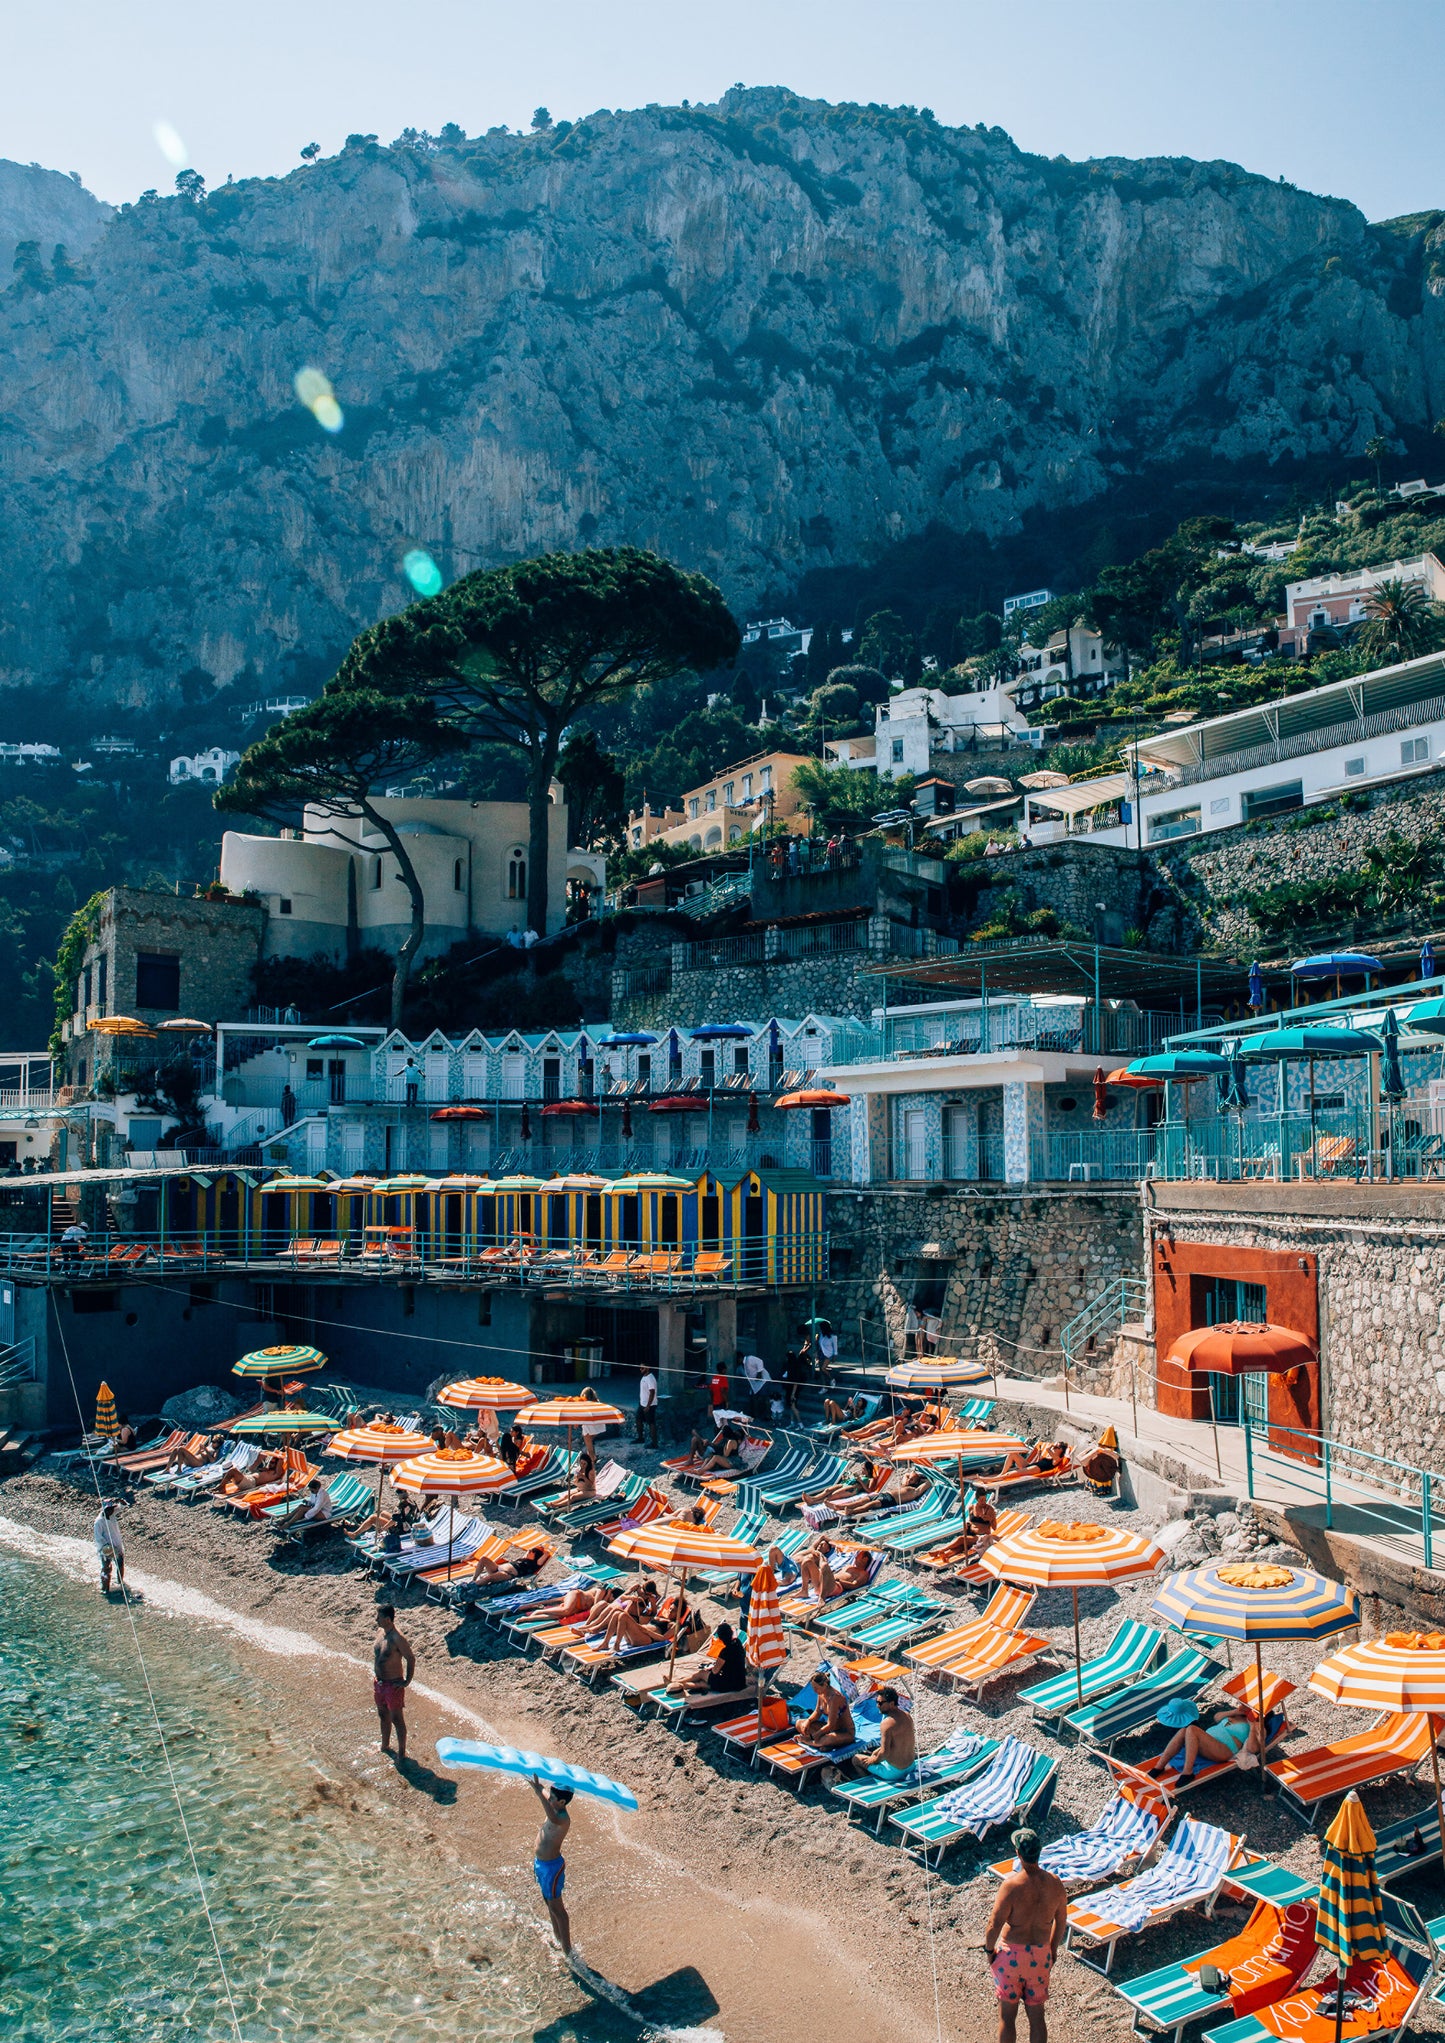 Bagni Internazionali Capri II, Italy